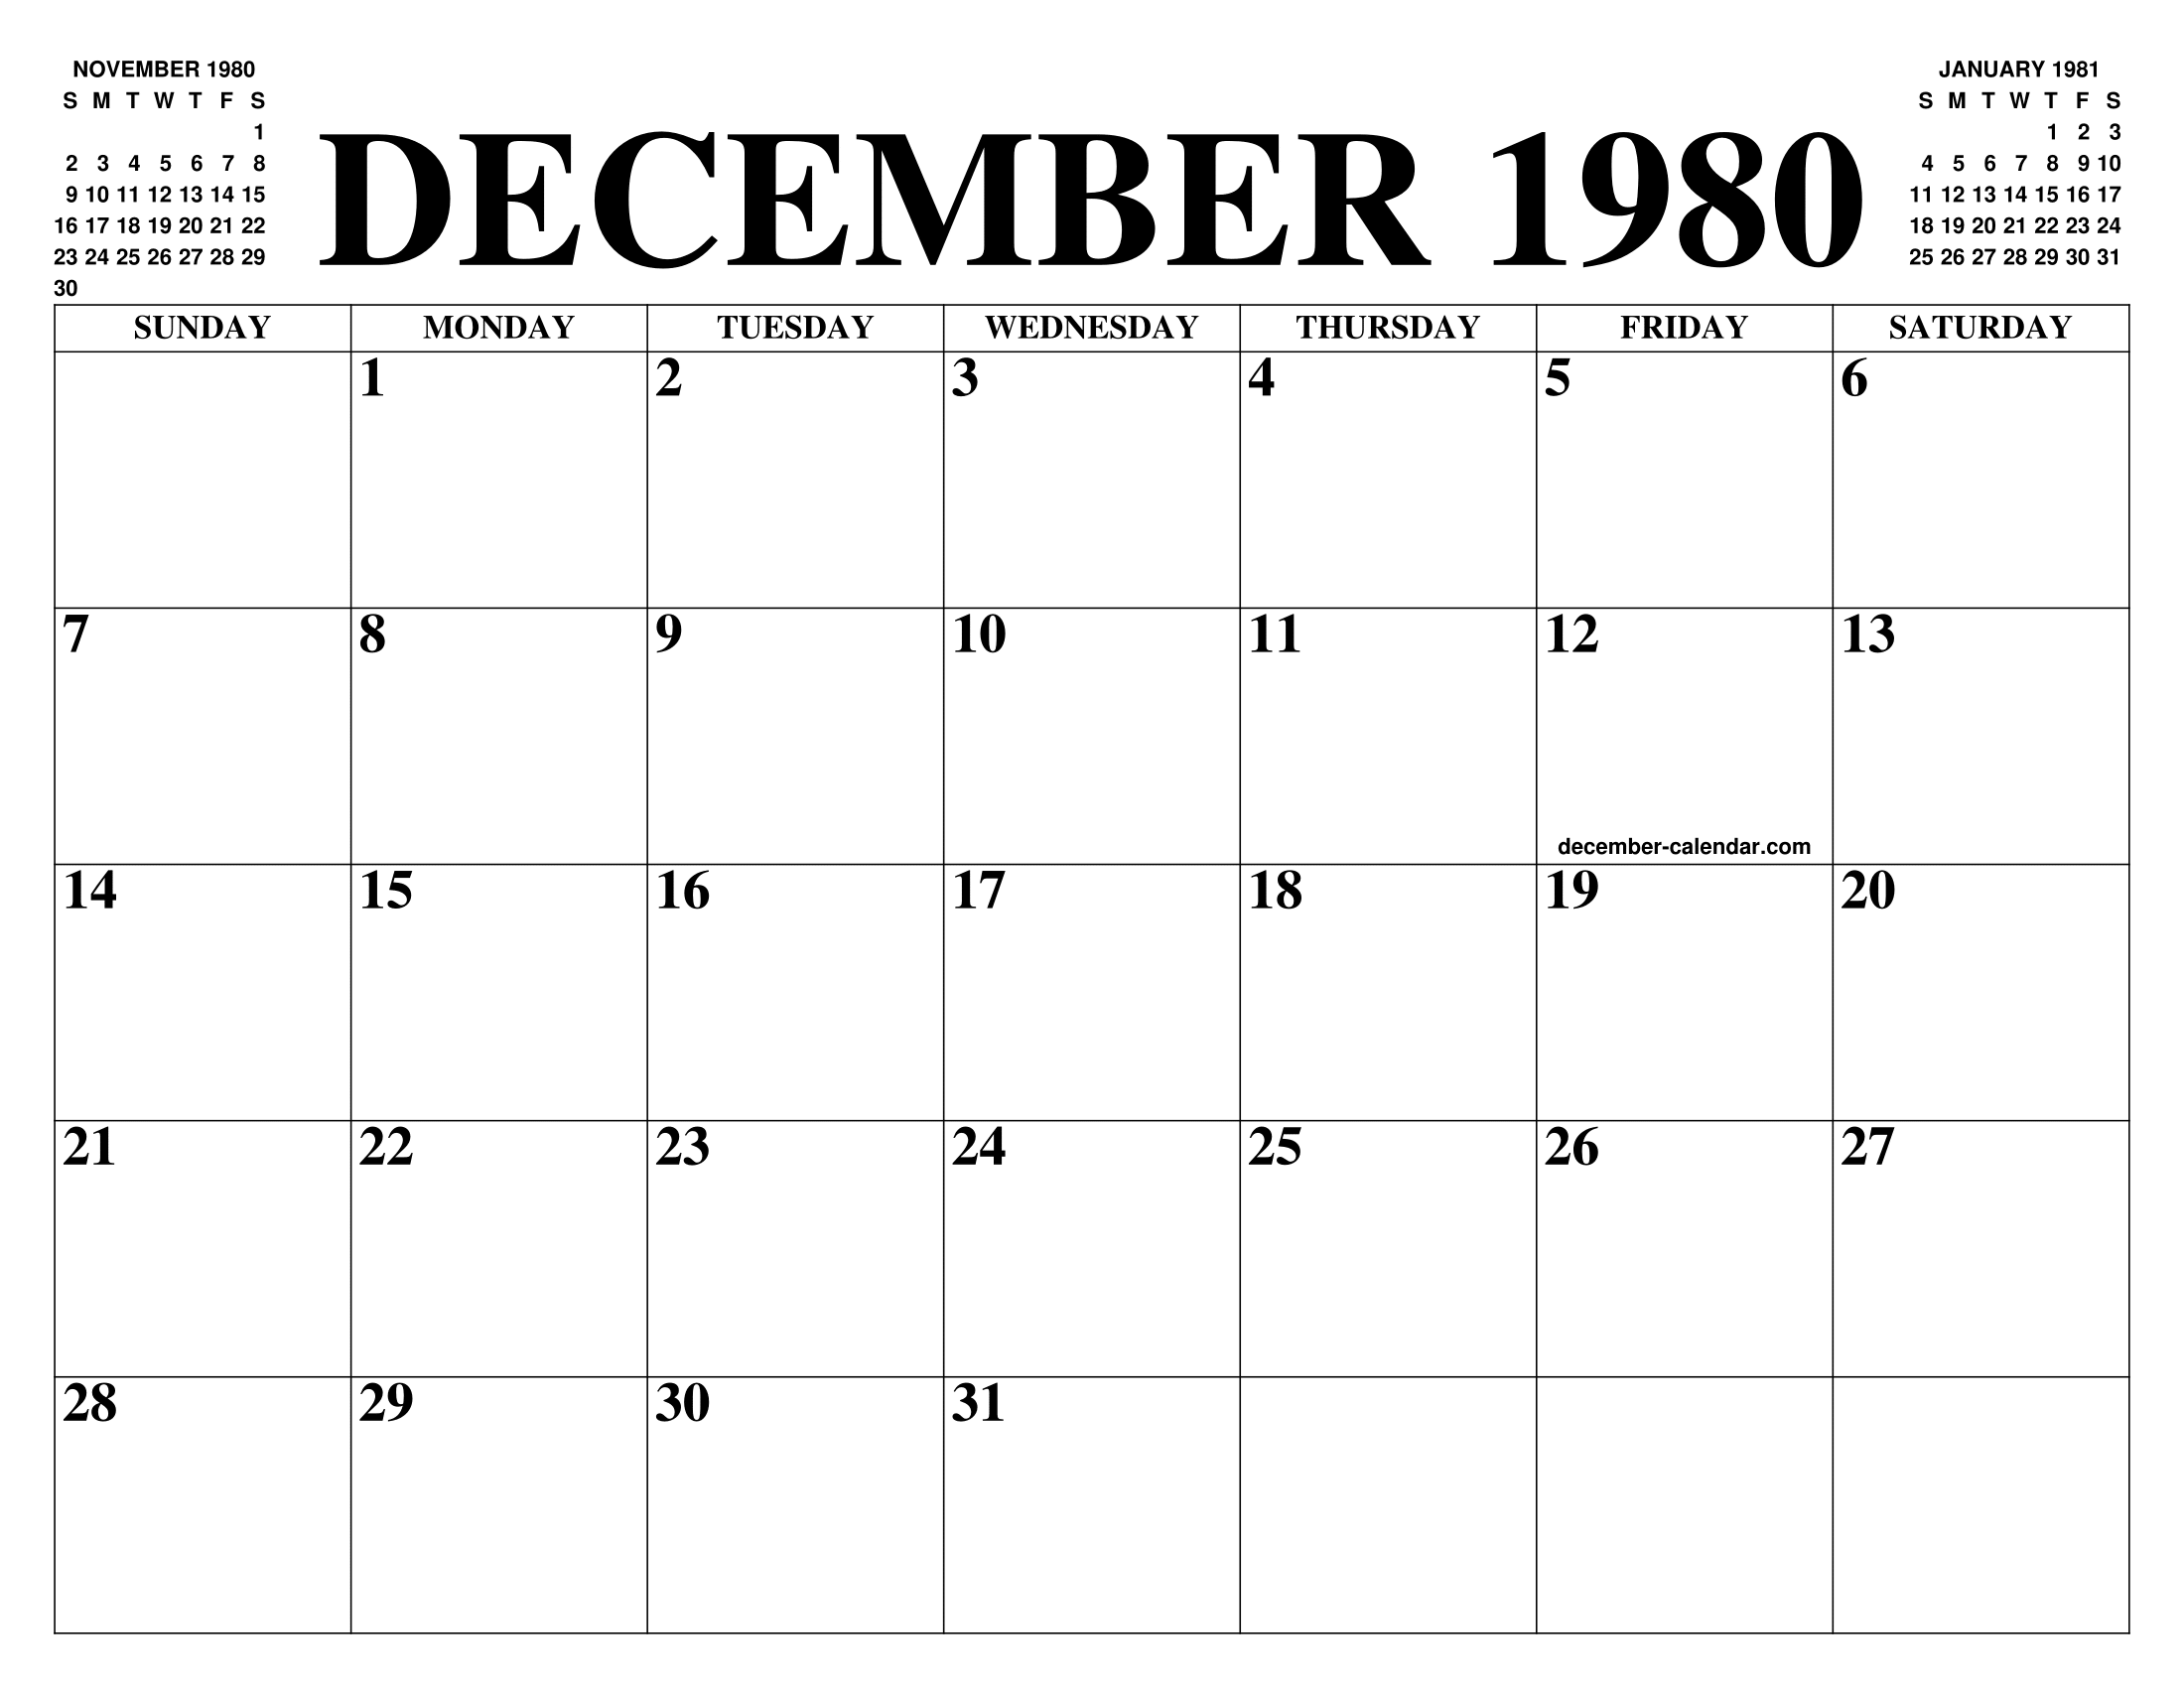 DECEMBER 1980 CALENDAR OF THE MONTH: FREE PRINTABLE DECEMBER CALENDAR